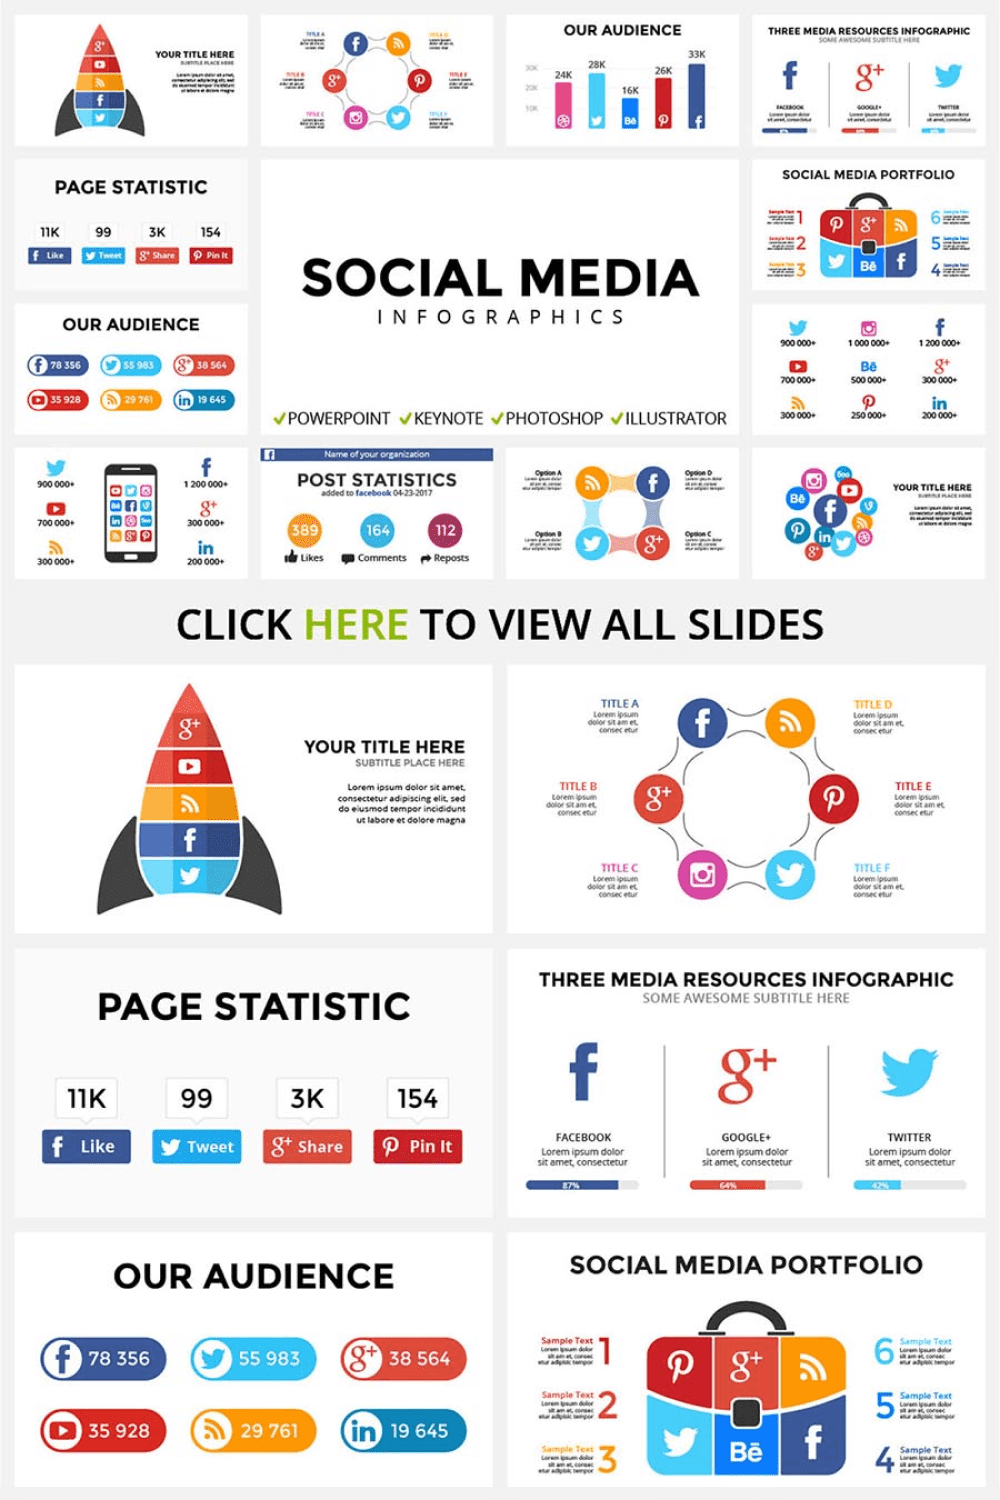 17 Social Media Infographics - MasterBundles - Pinterest Collage Image.